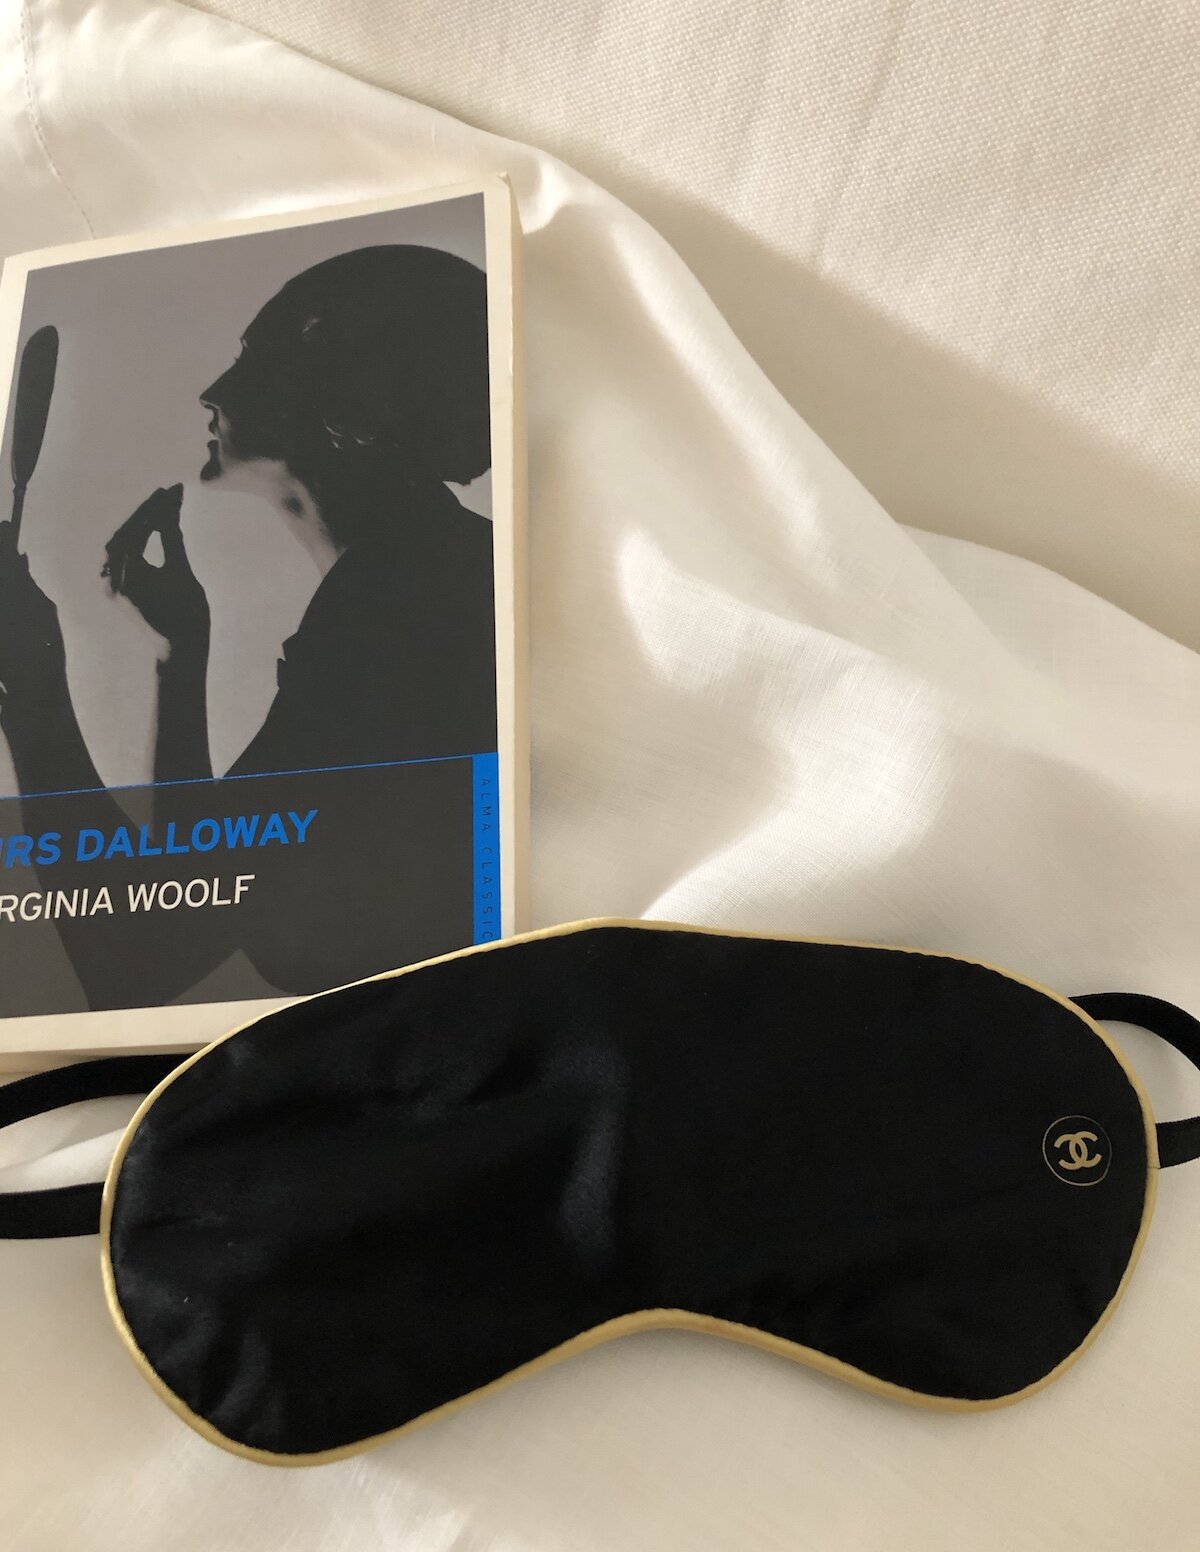 Chanel silk sleep mask — Mia Luxury Vintage